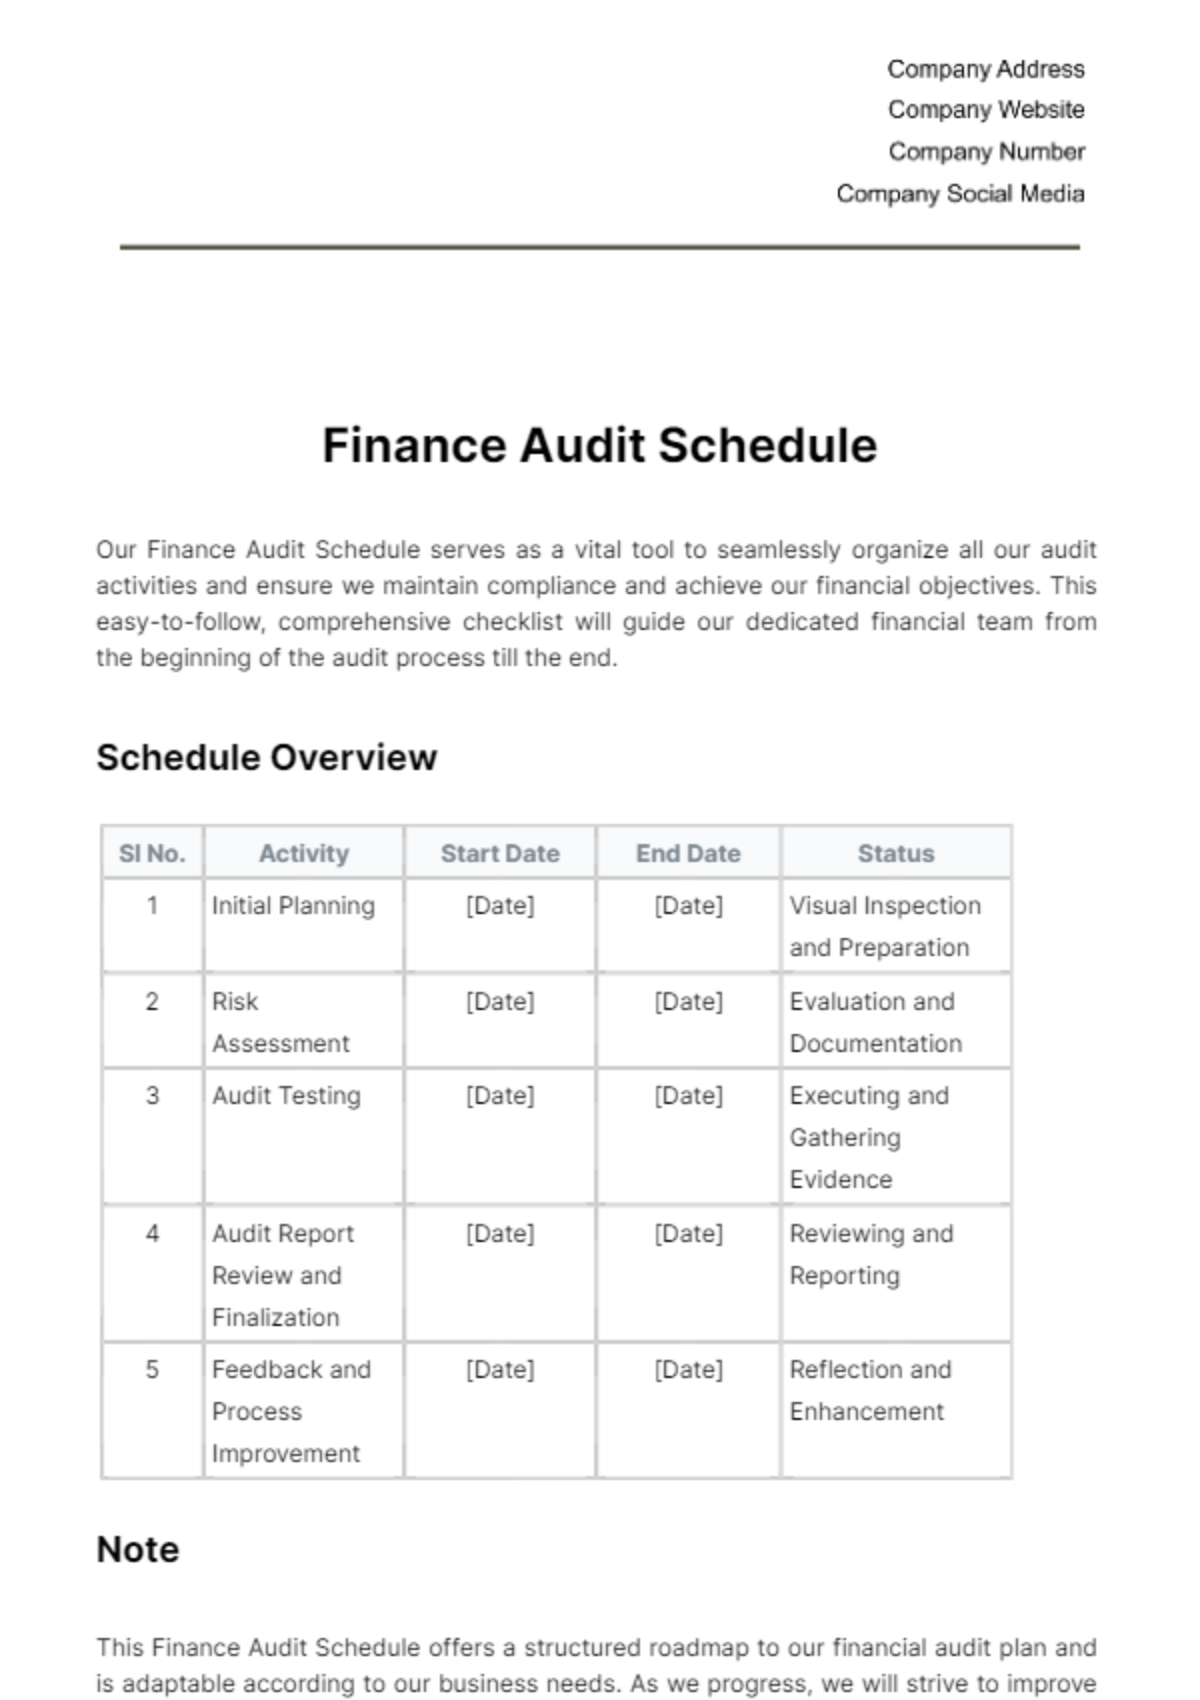 Finance Audit Schedule Template